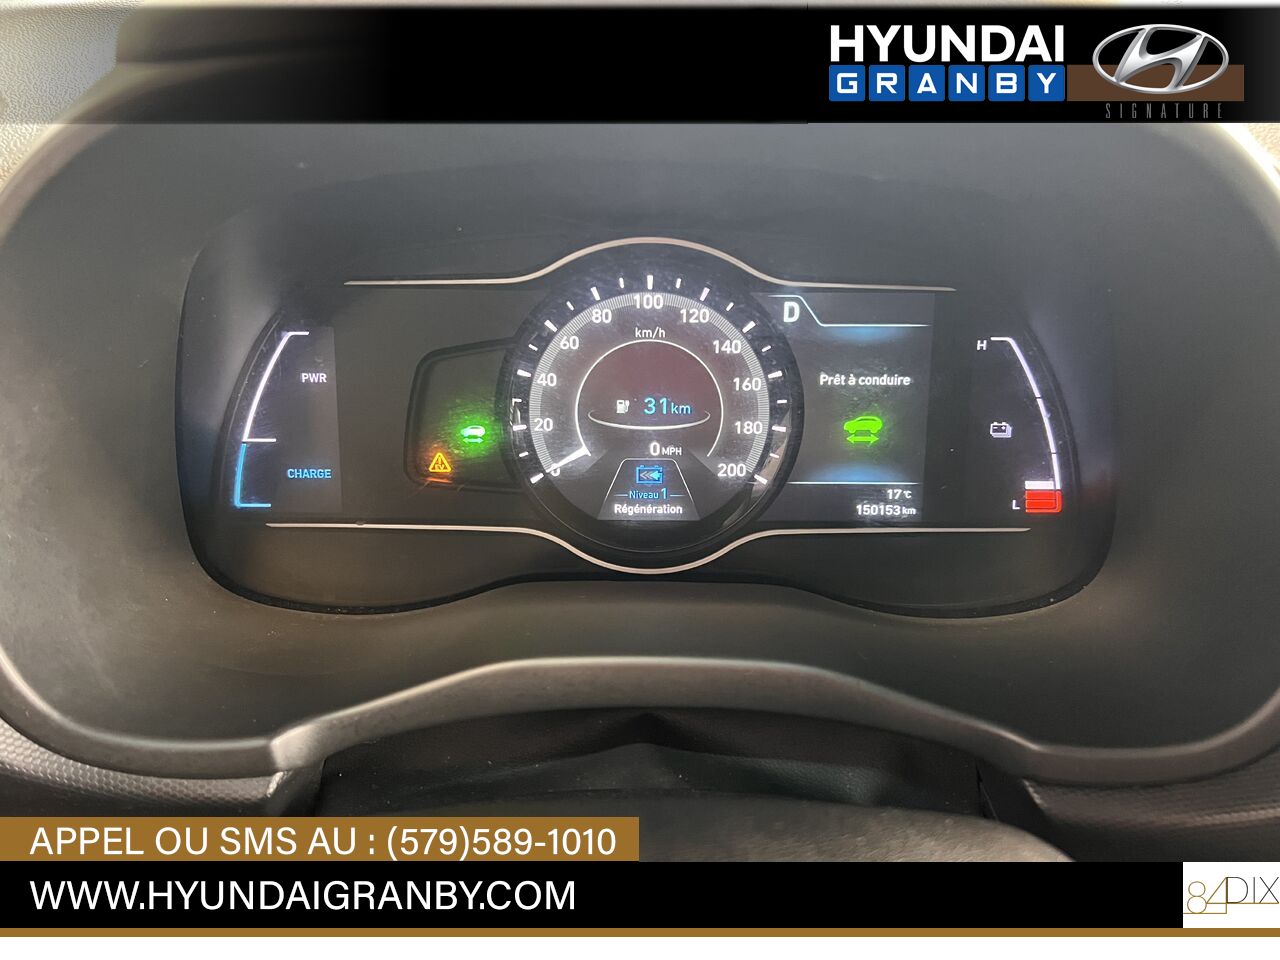 Hyundai Kona électrique 2019 Granby - photo #33